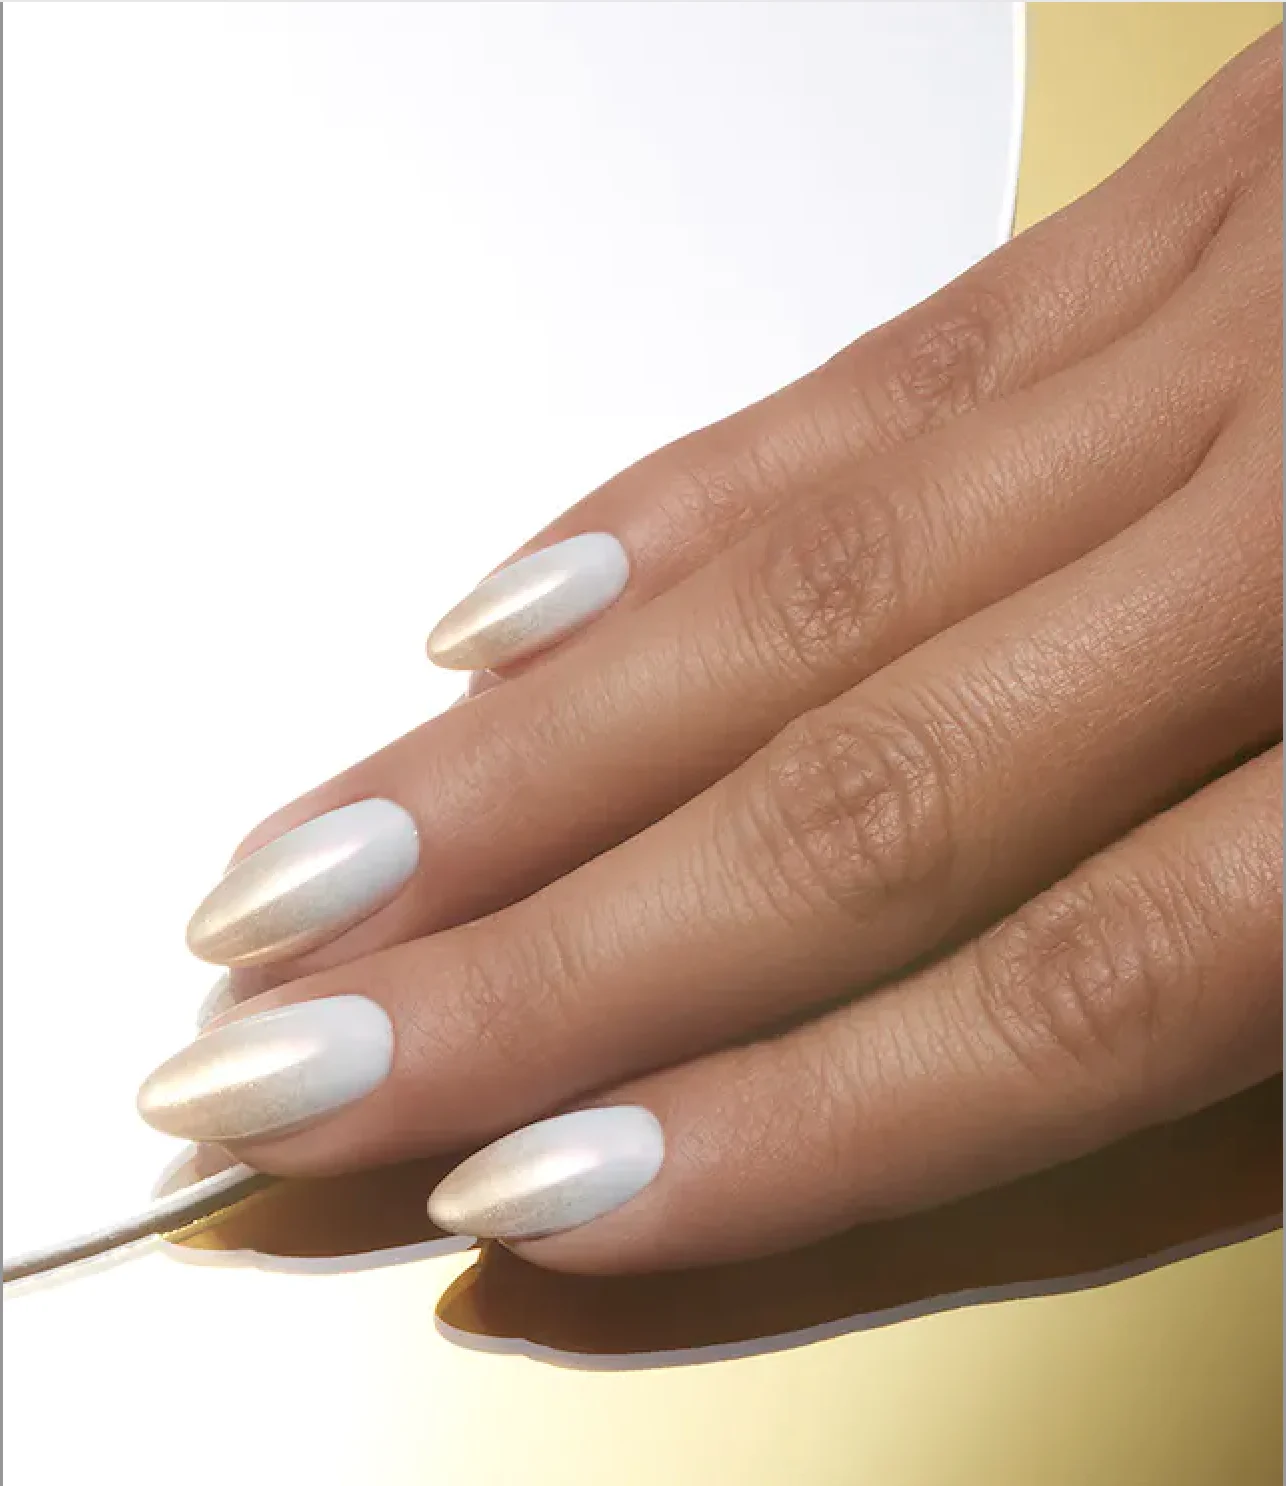 Portu-Gold Ombre White & Gold Chrome Ombre Pro Nail Art